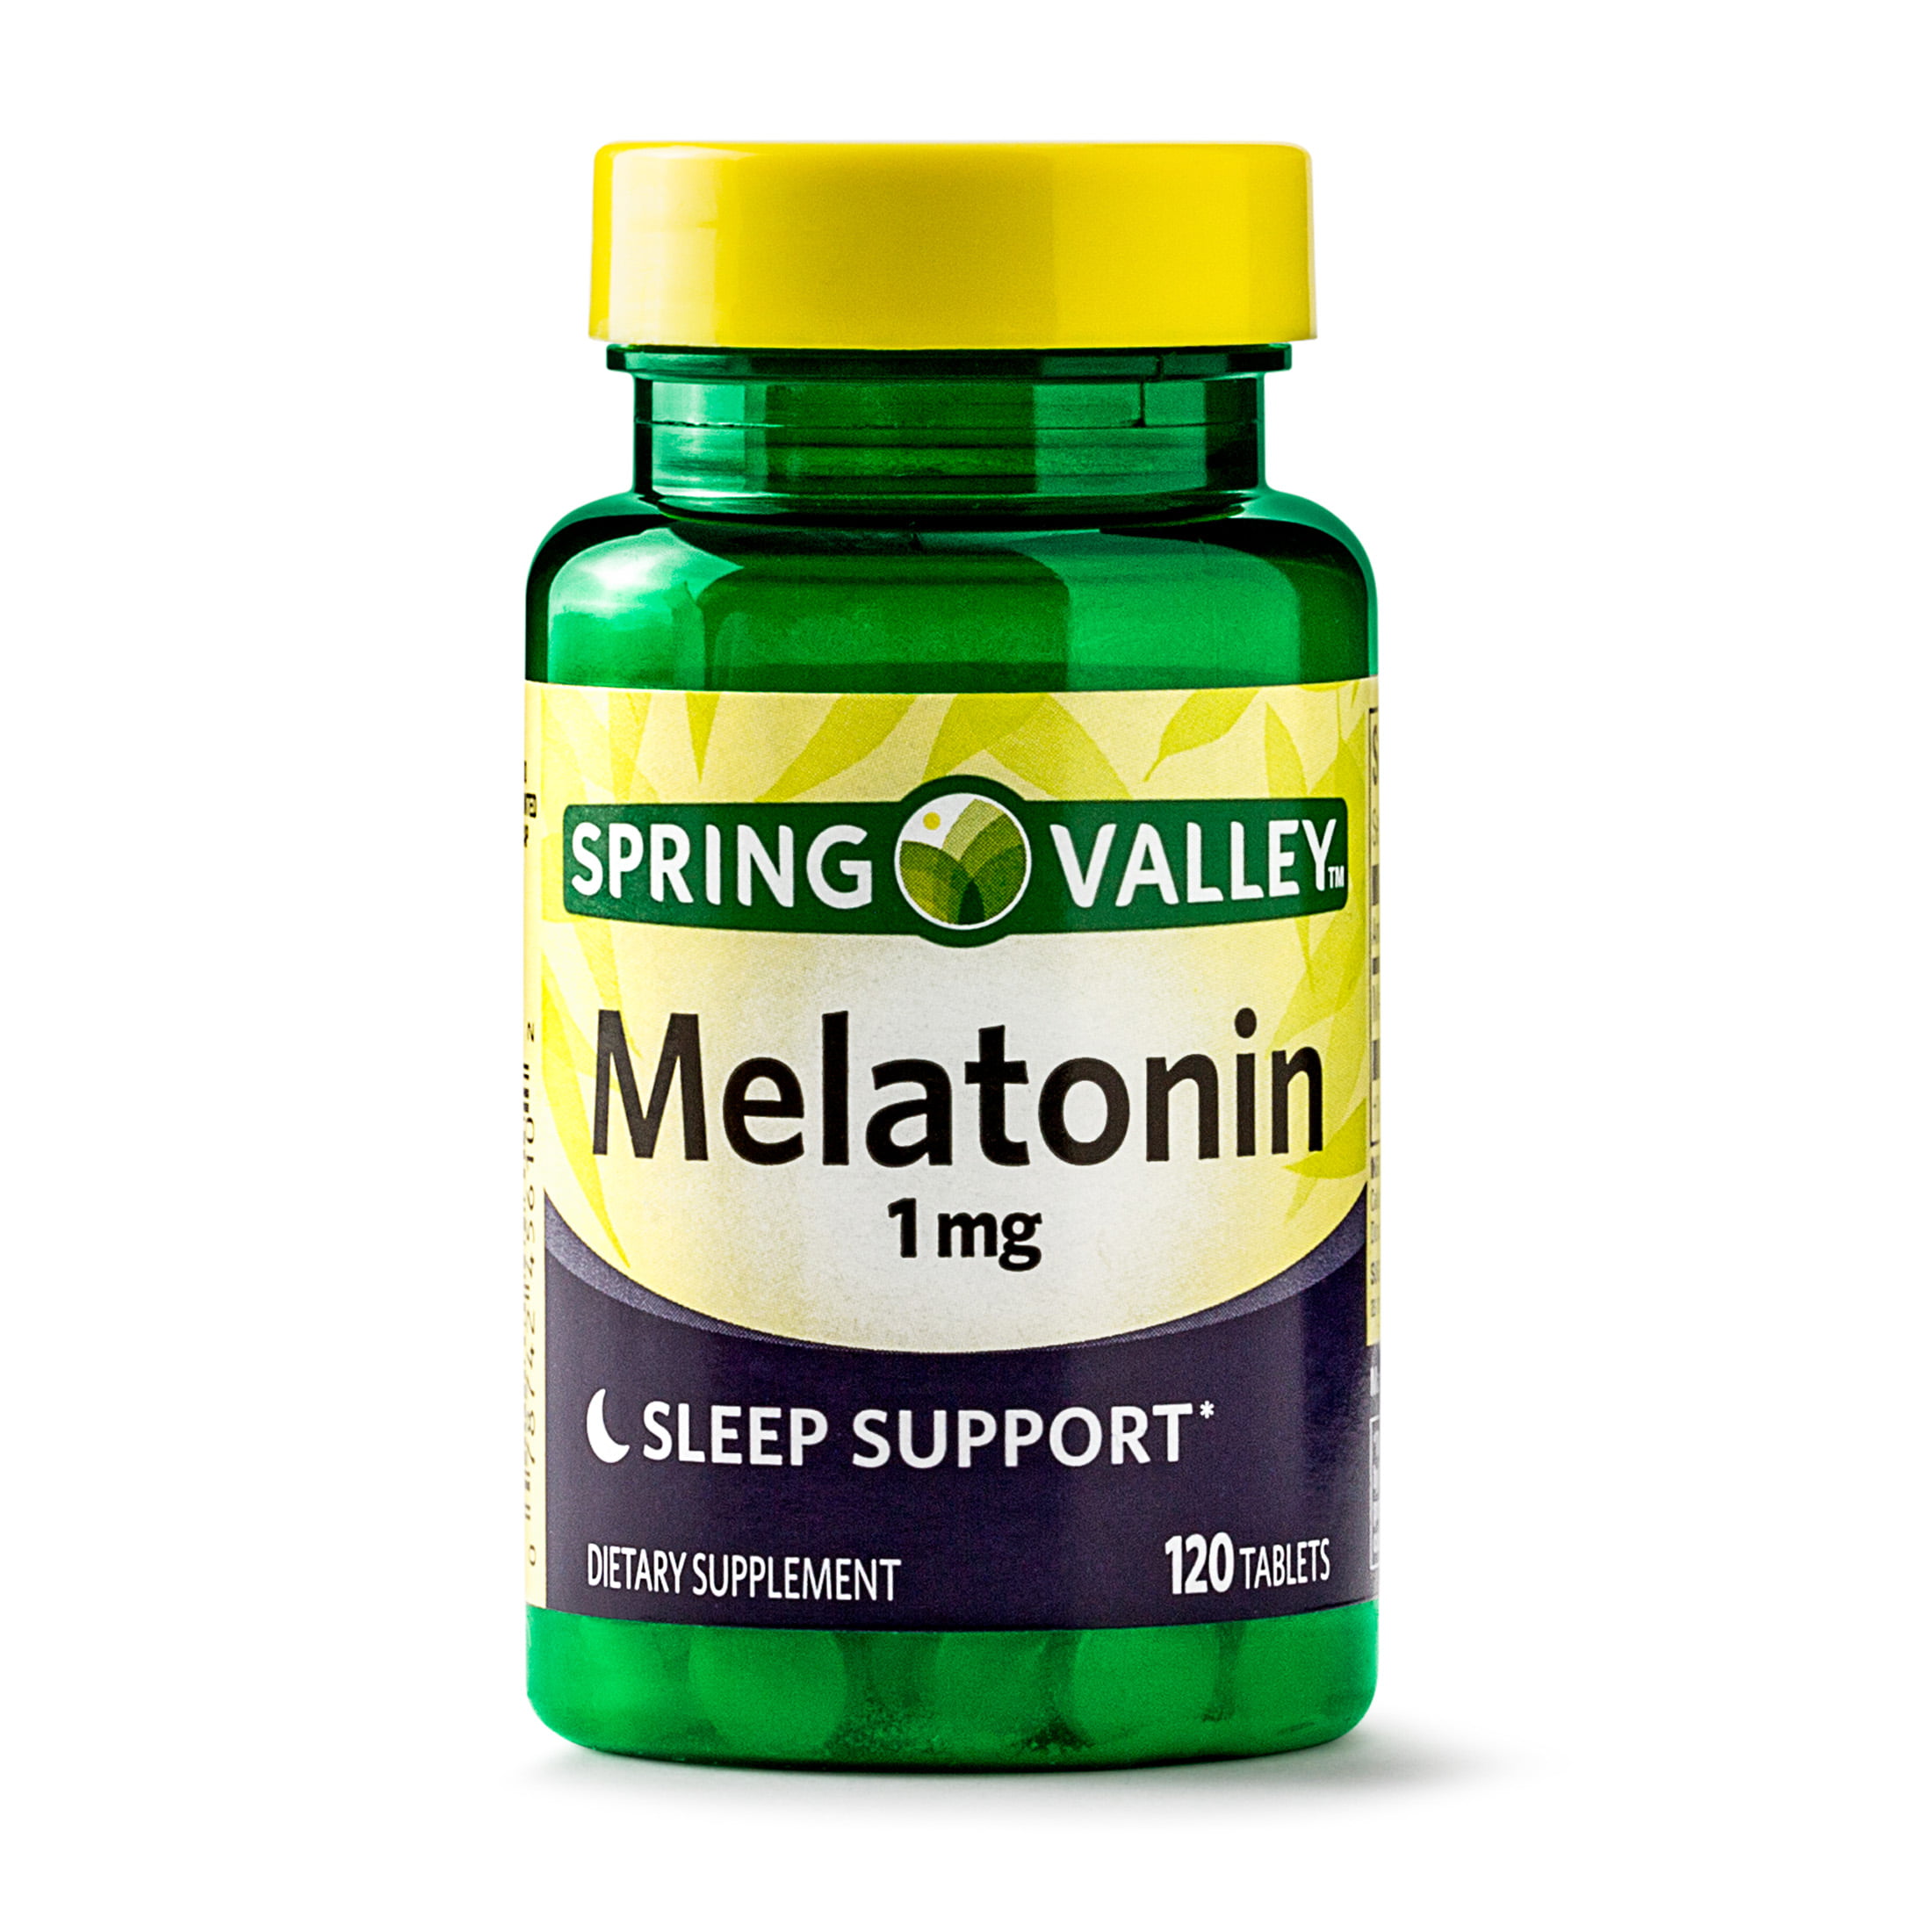 Spring Valley Melatonin Tablets Mg Ct Walmart Walmart